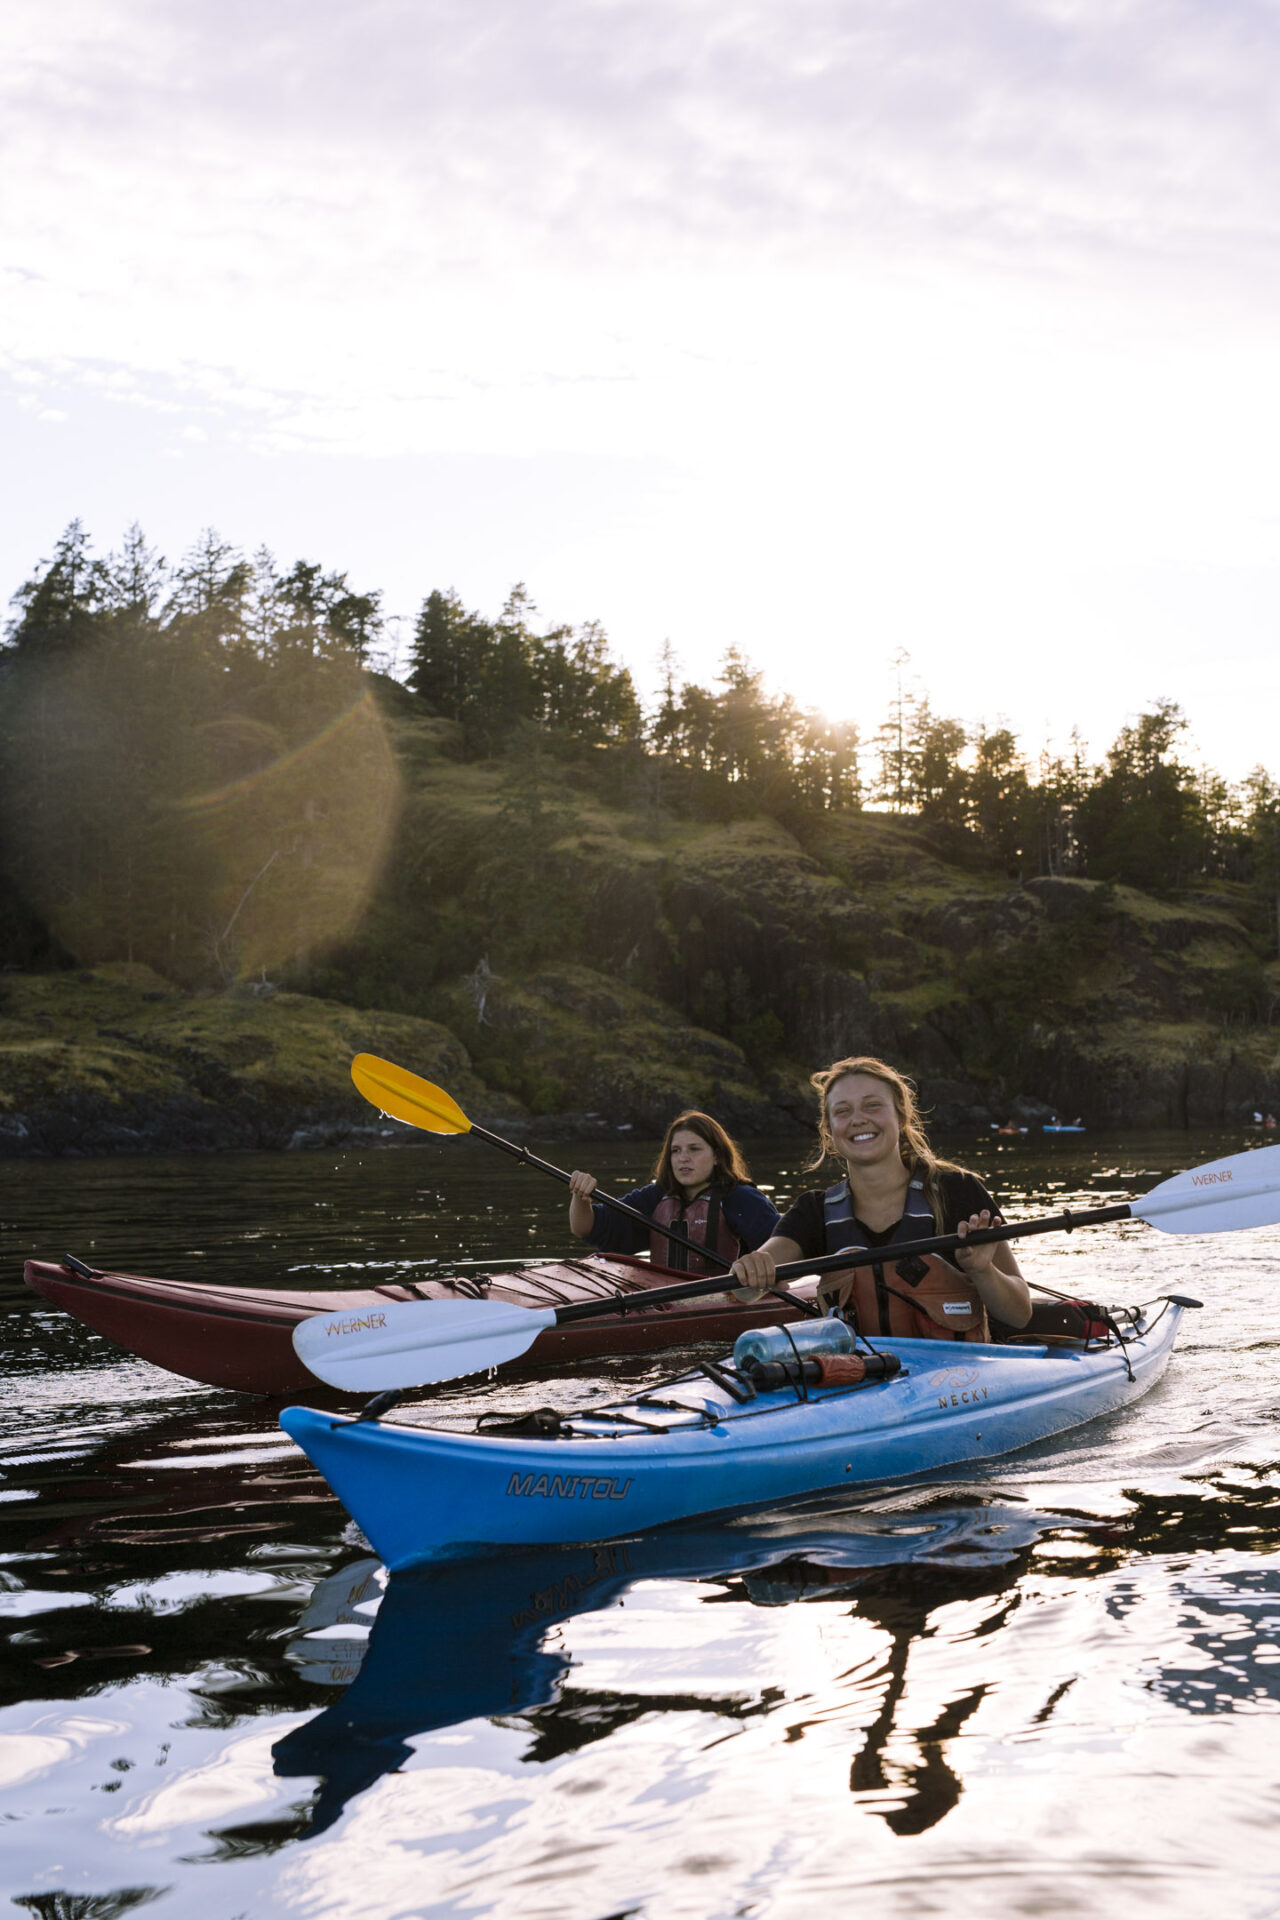 Quadra Island Kayaks & Adventures – Your Next Adventure is Waiting